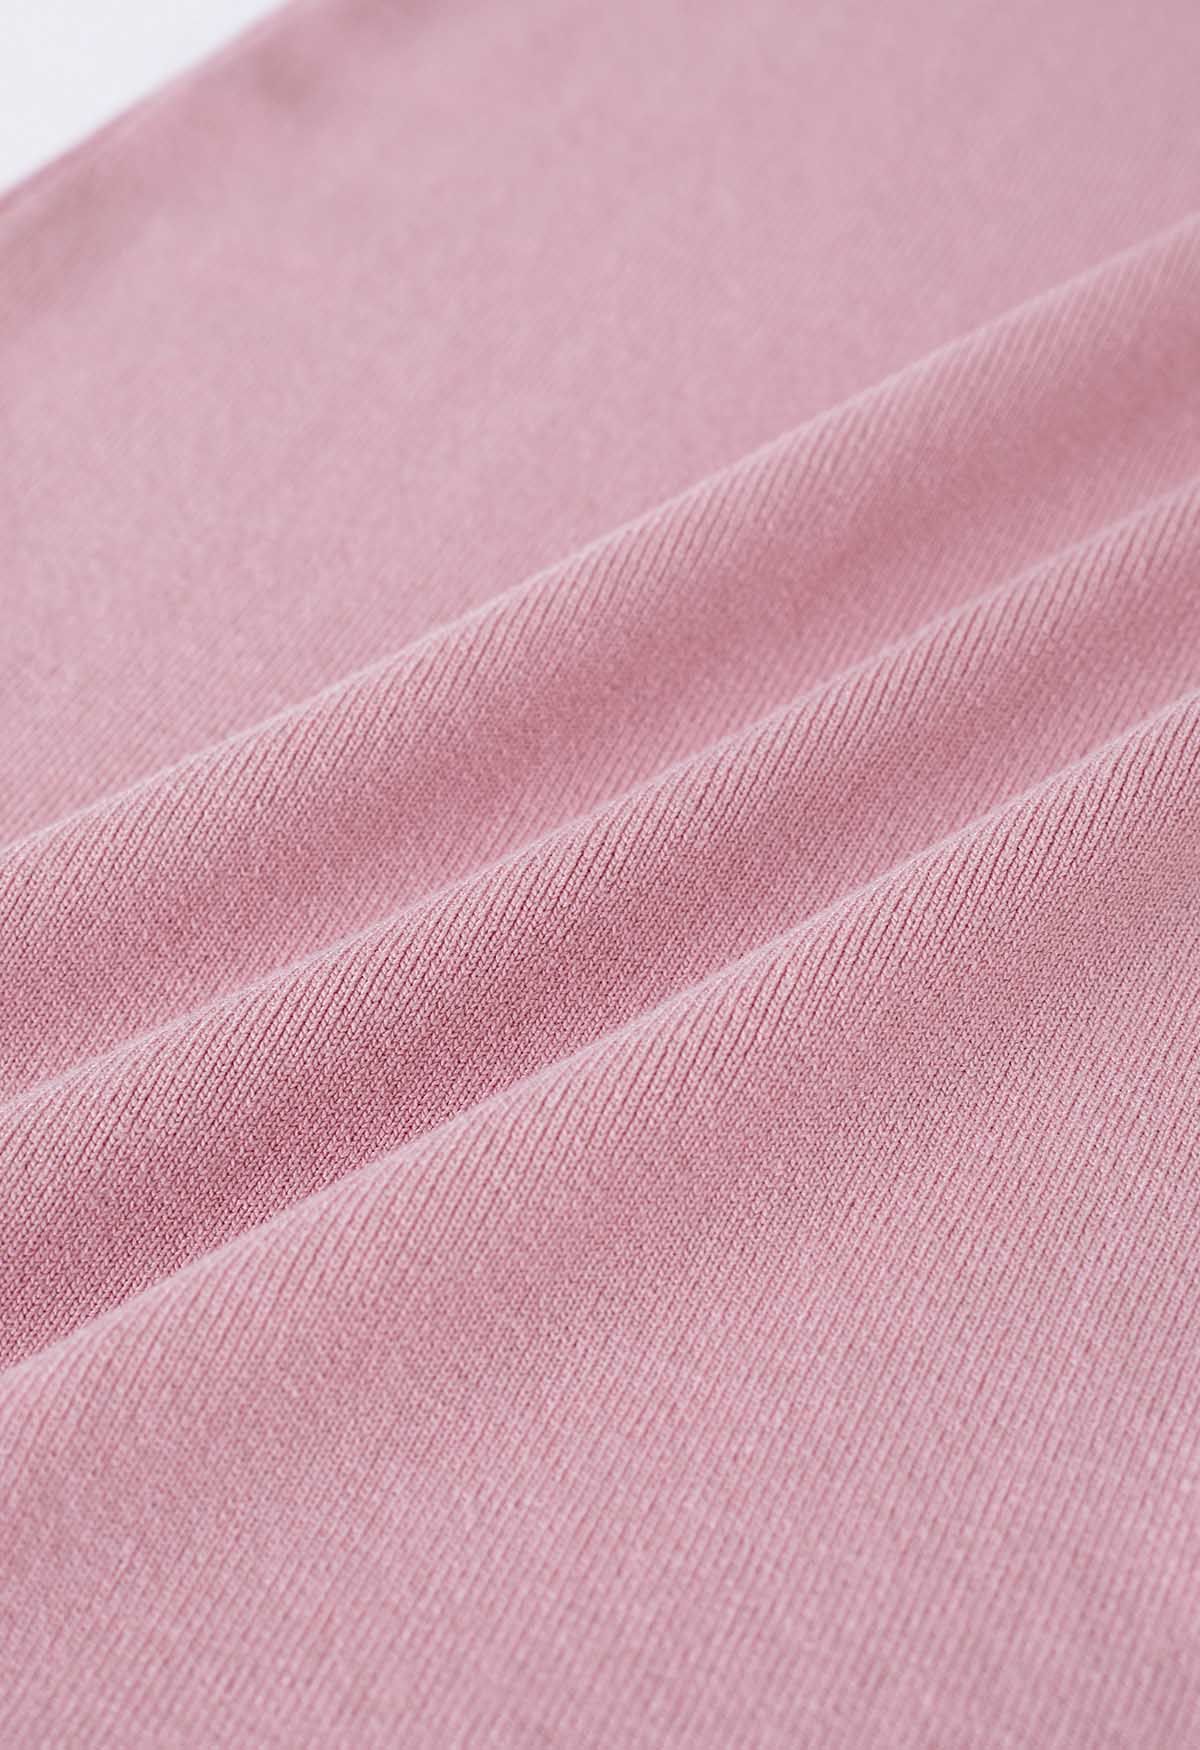 Notch Neckline Bodycon Knit Dress in Pink